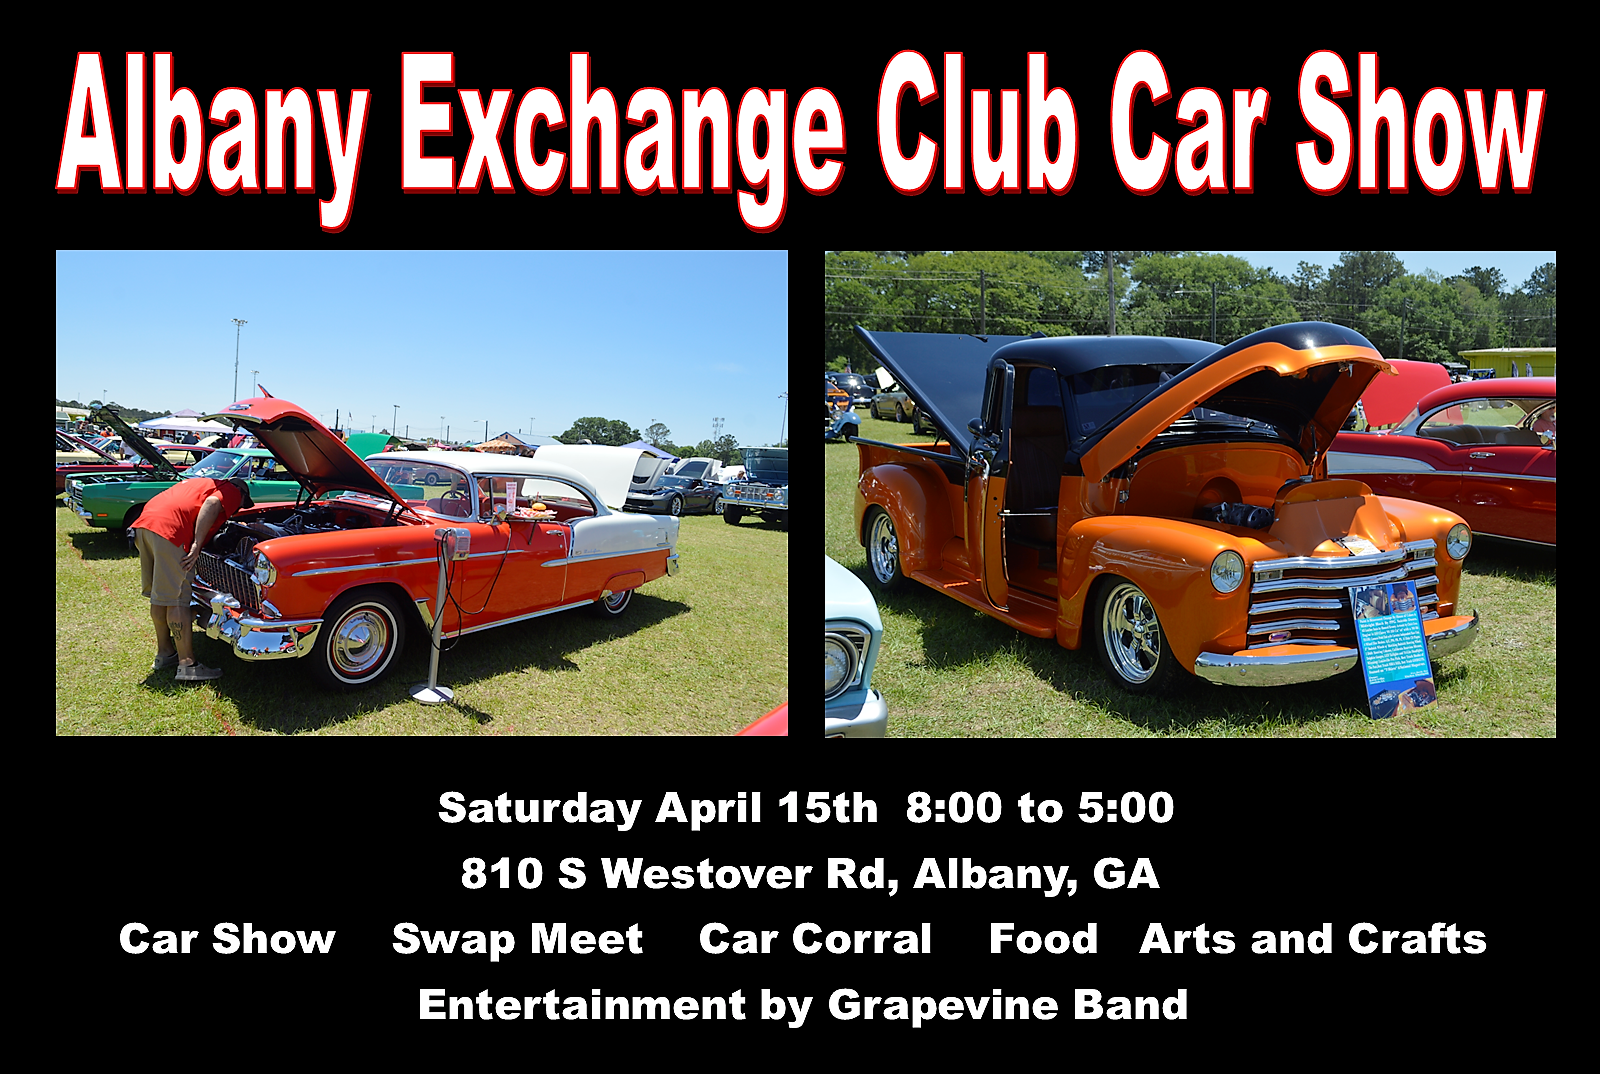 Albany Exchange Club Car Show Car Show Radar